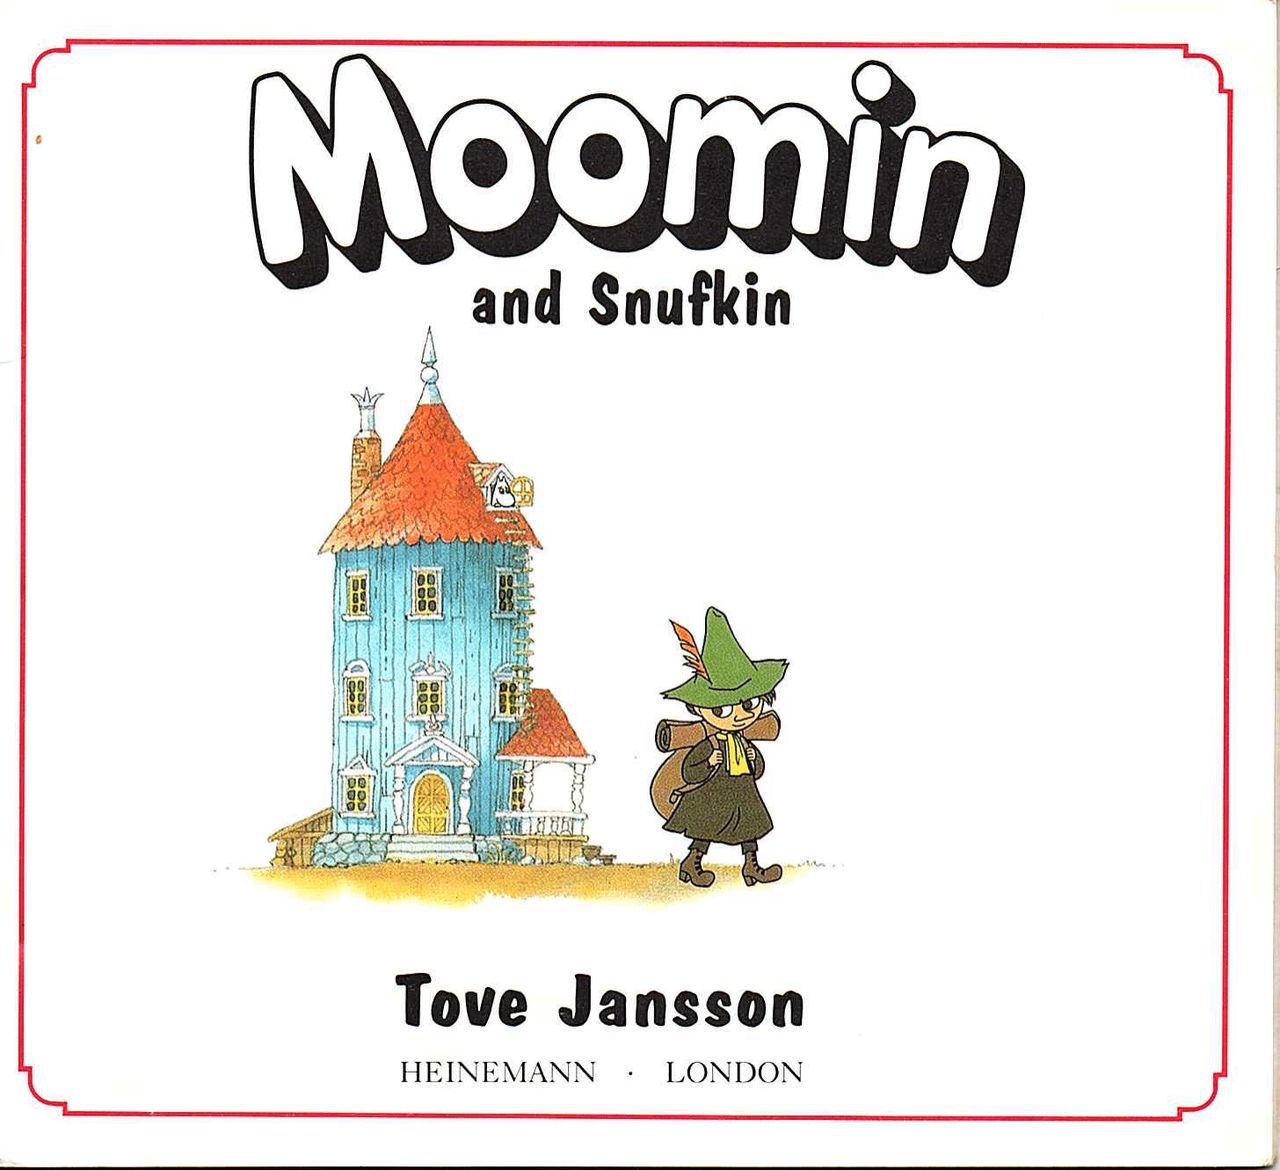 (1993) Moomin and Snufkin 4